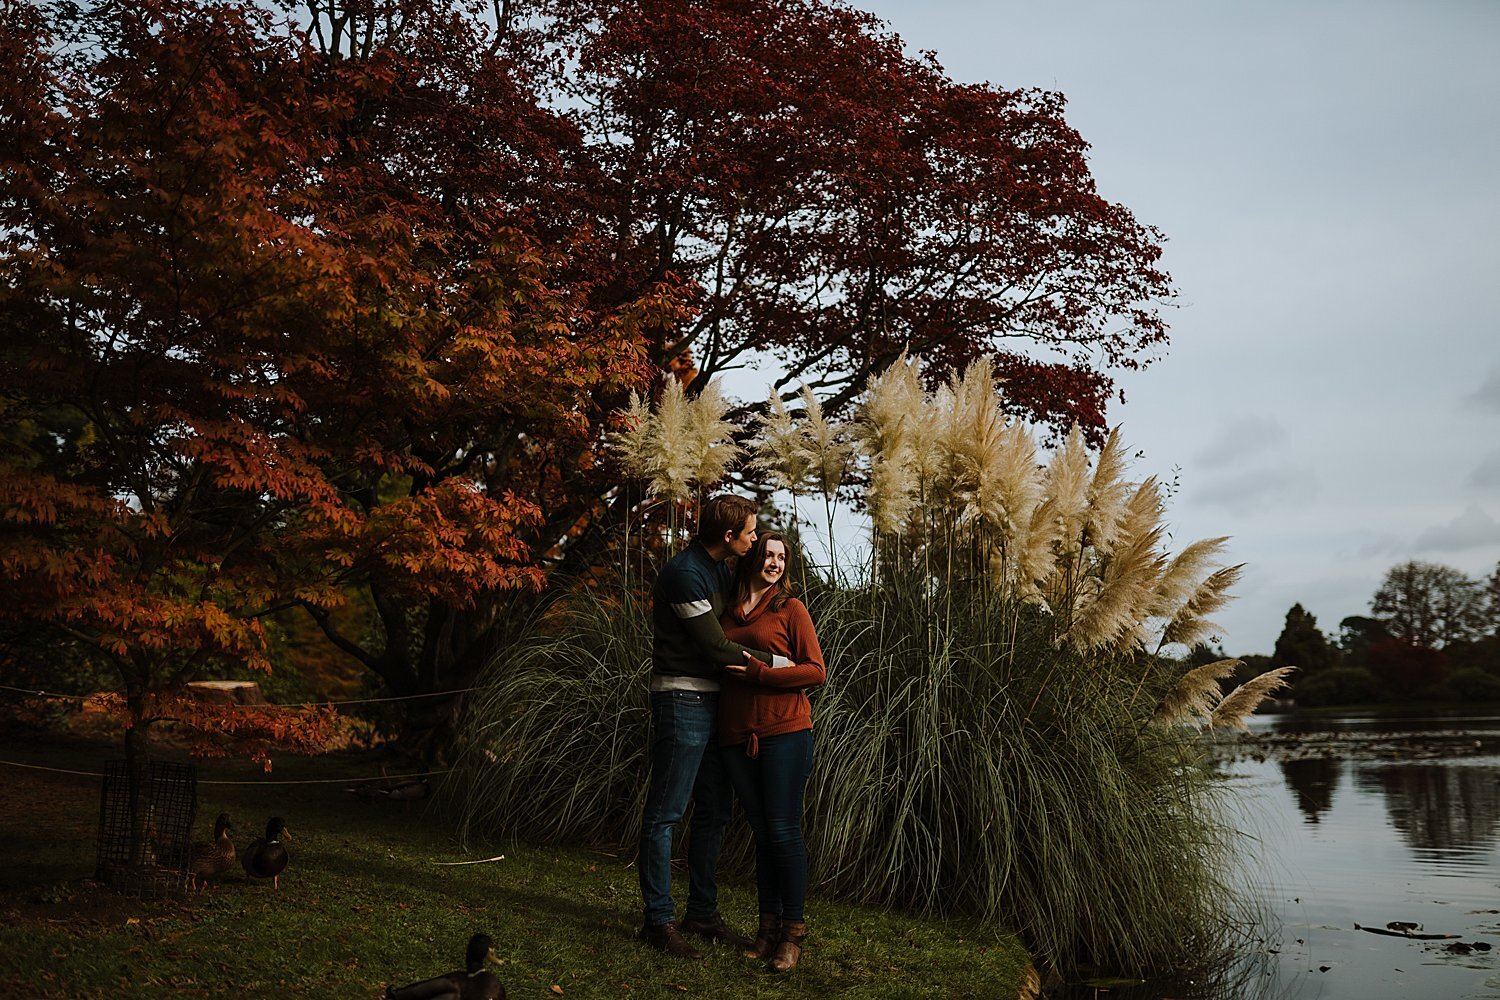 Sheffield Park wedding photographer in Sussex. An Autumnal engagement shoot.